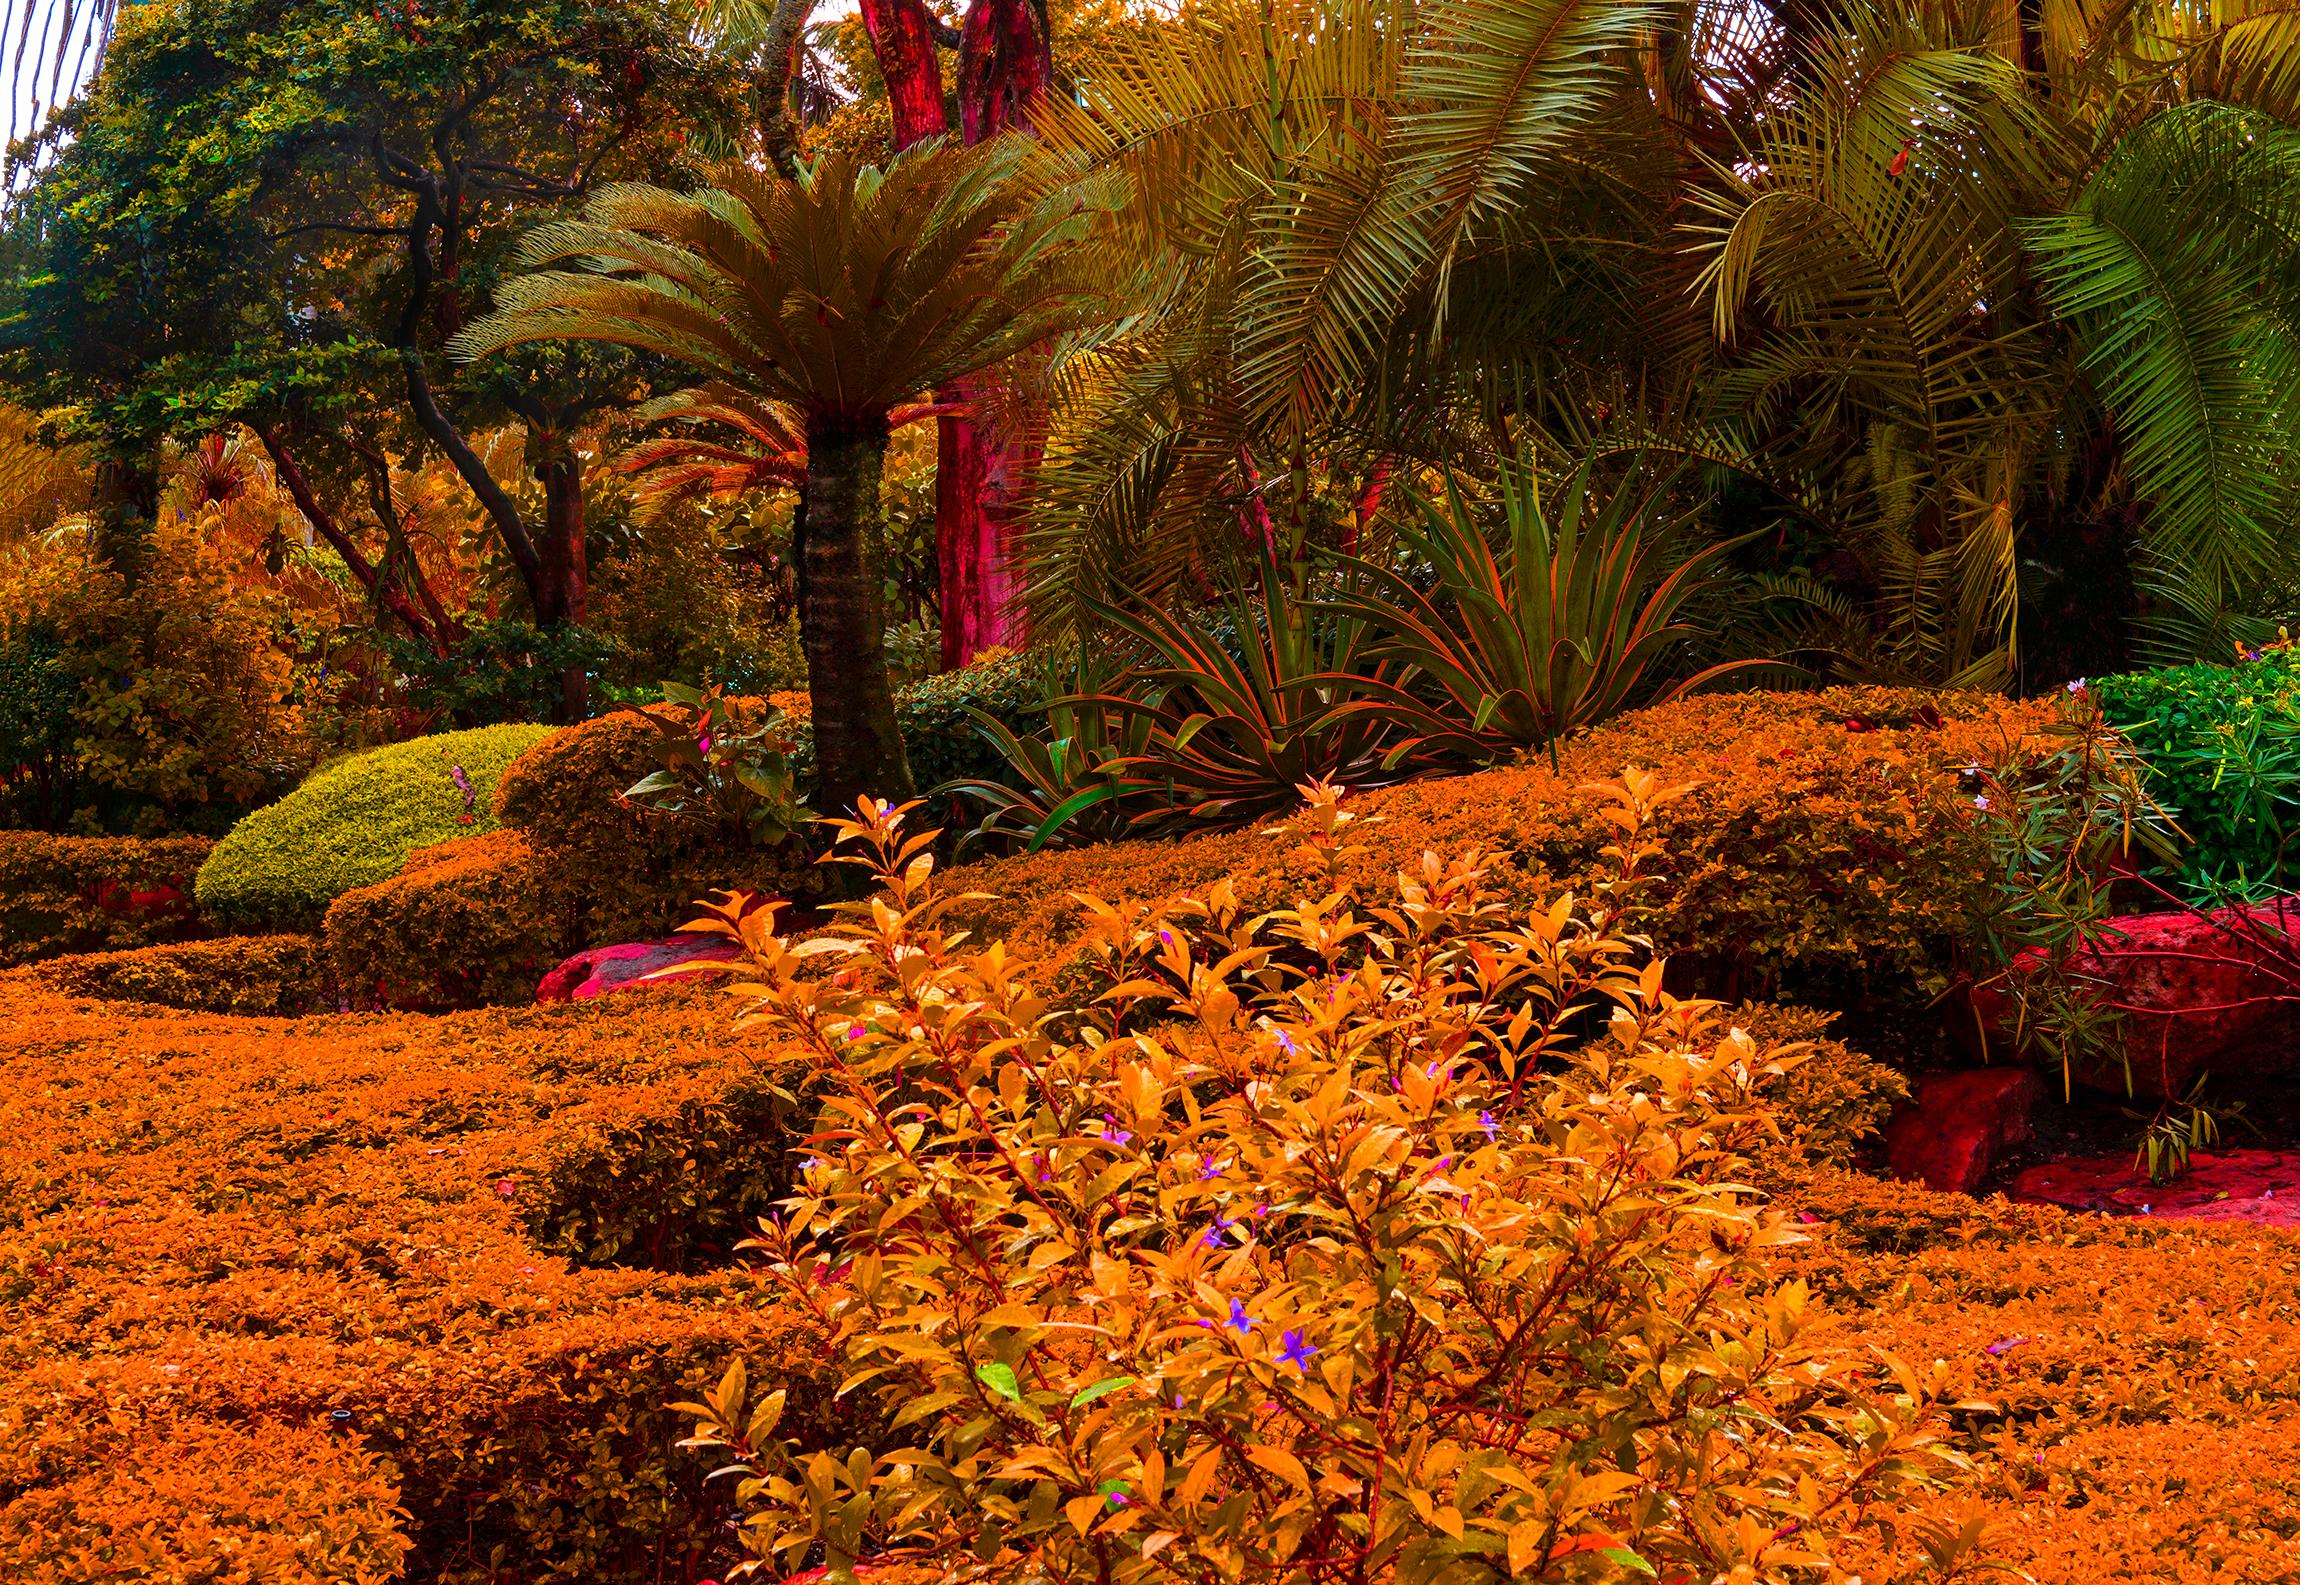 Robert Funk Color Photograph -  Tasty Garden of Eden